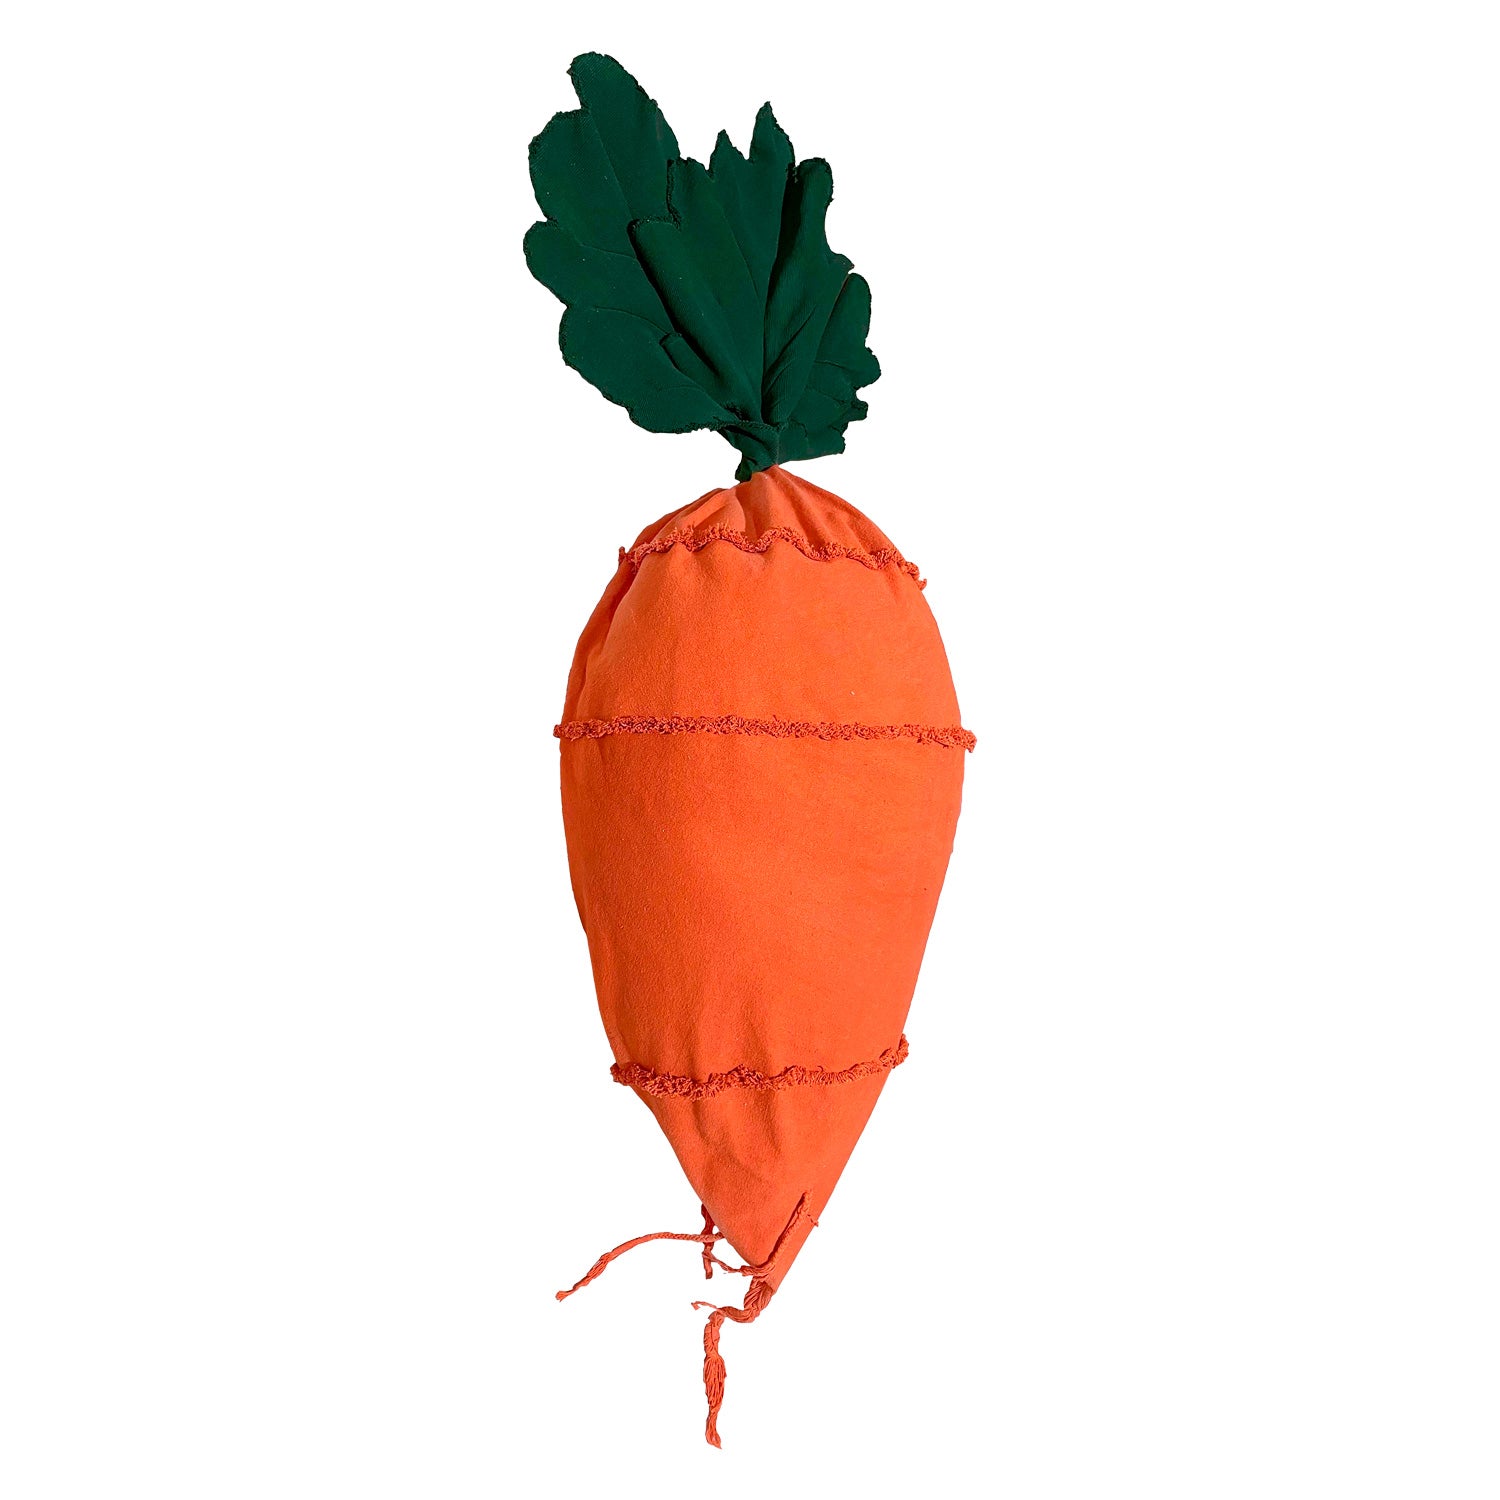 oli + carol cathy the carrot - Little